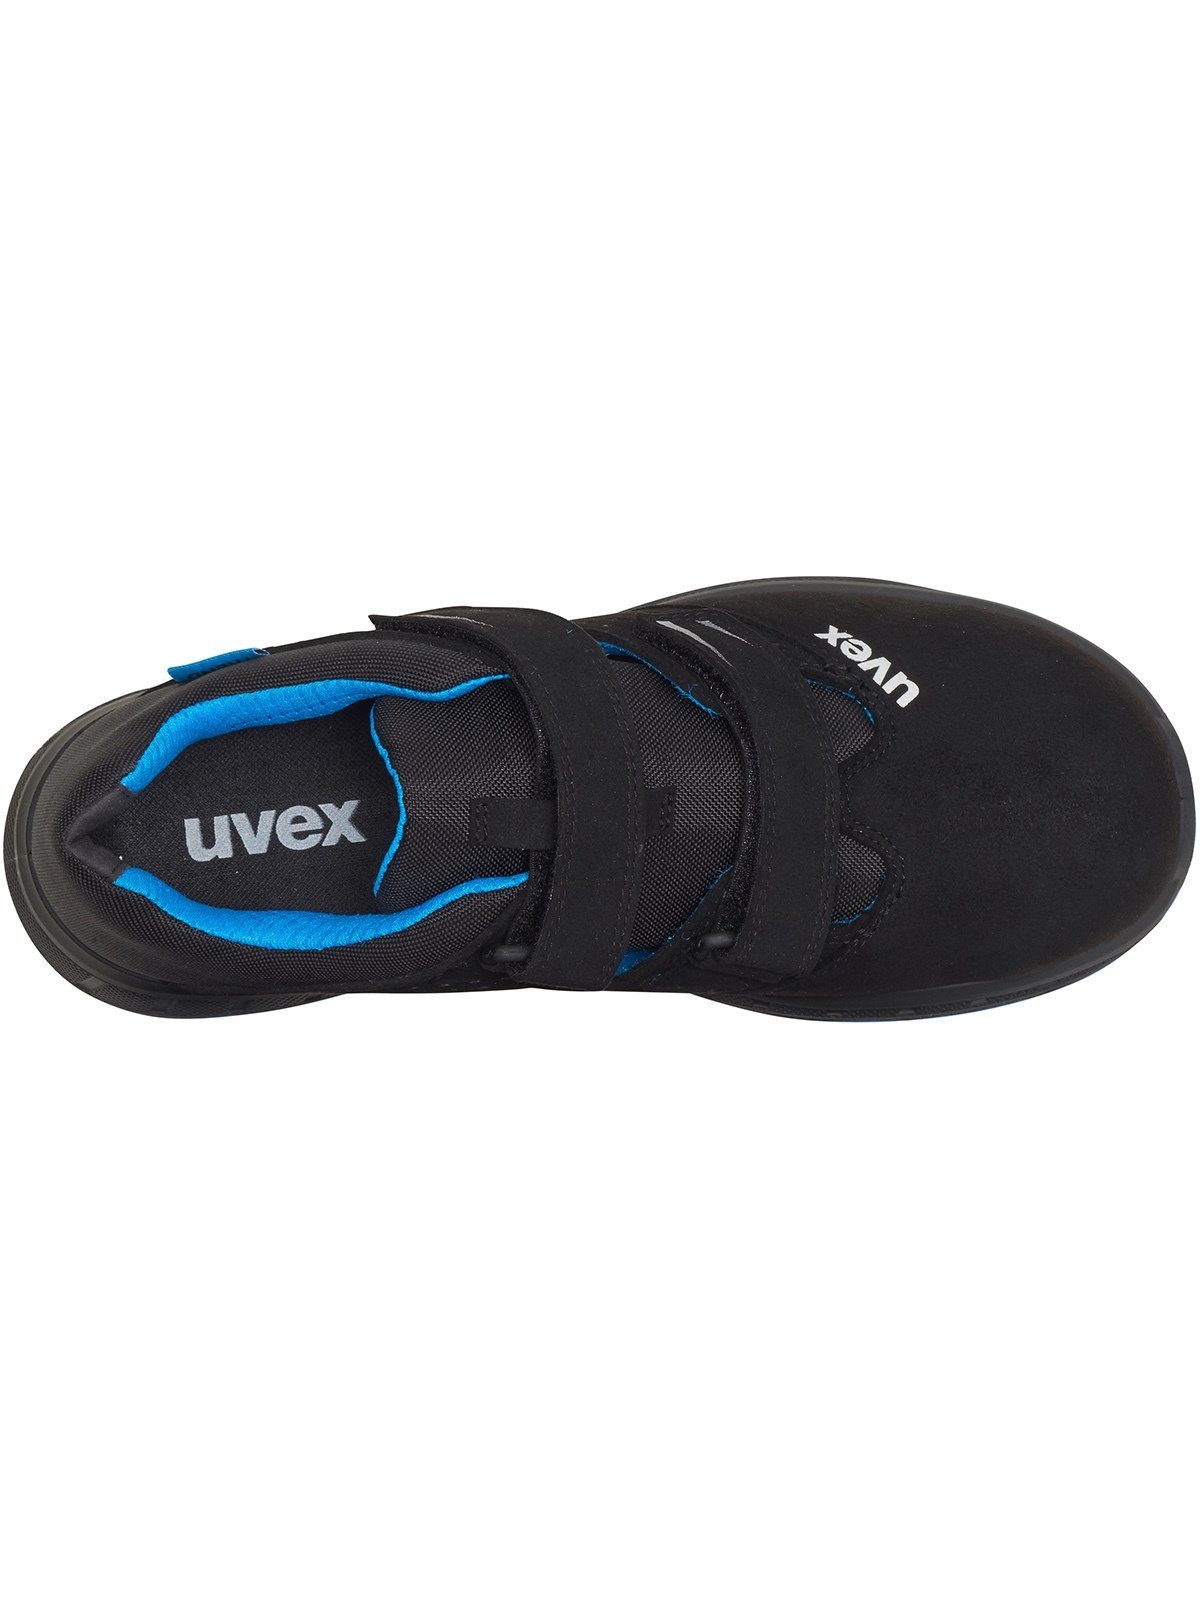 Uvex uvex Arbeitsschuh Sandale P SRC S1 2 trend